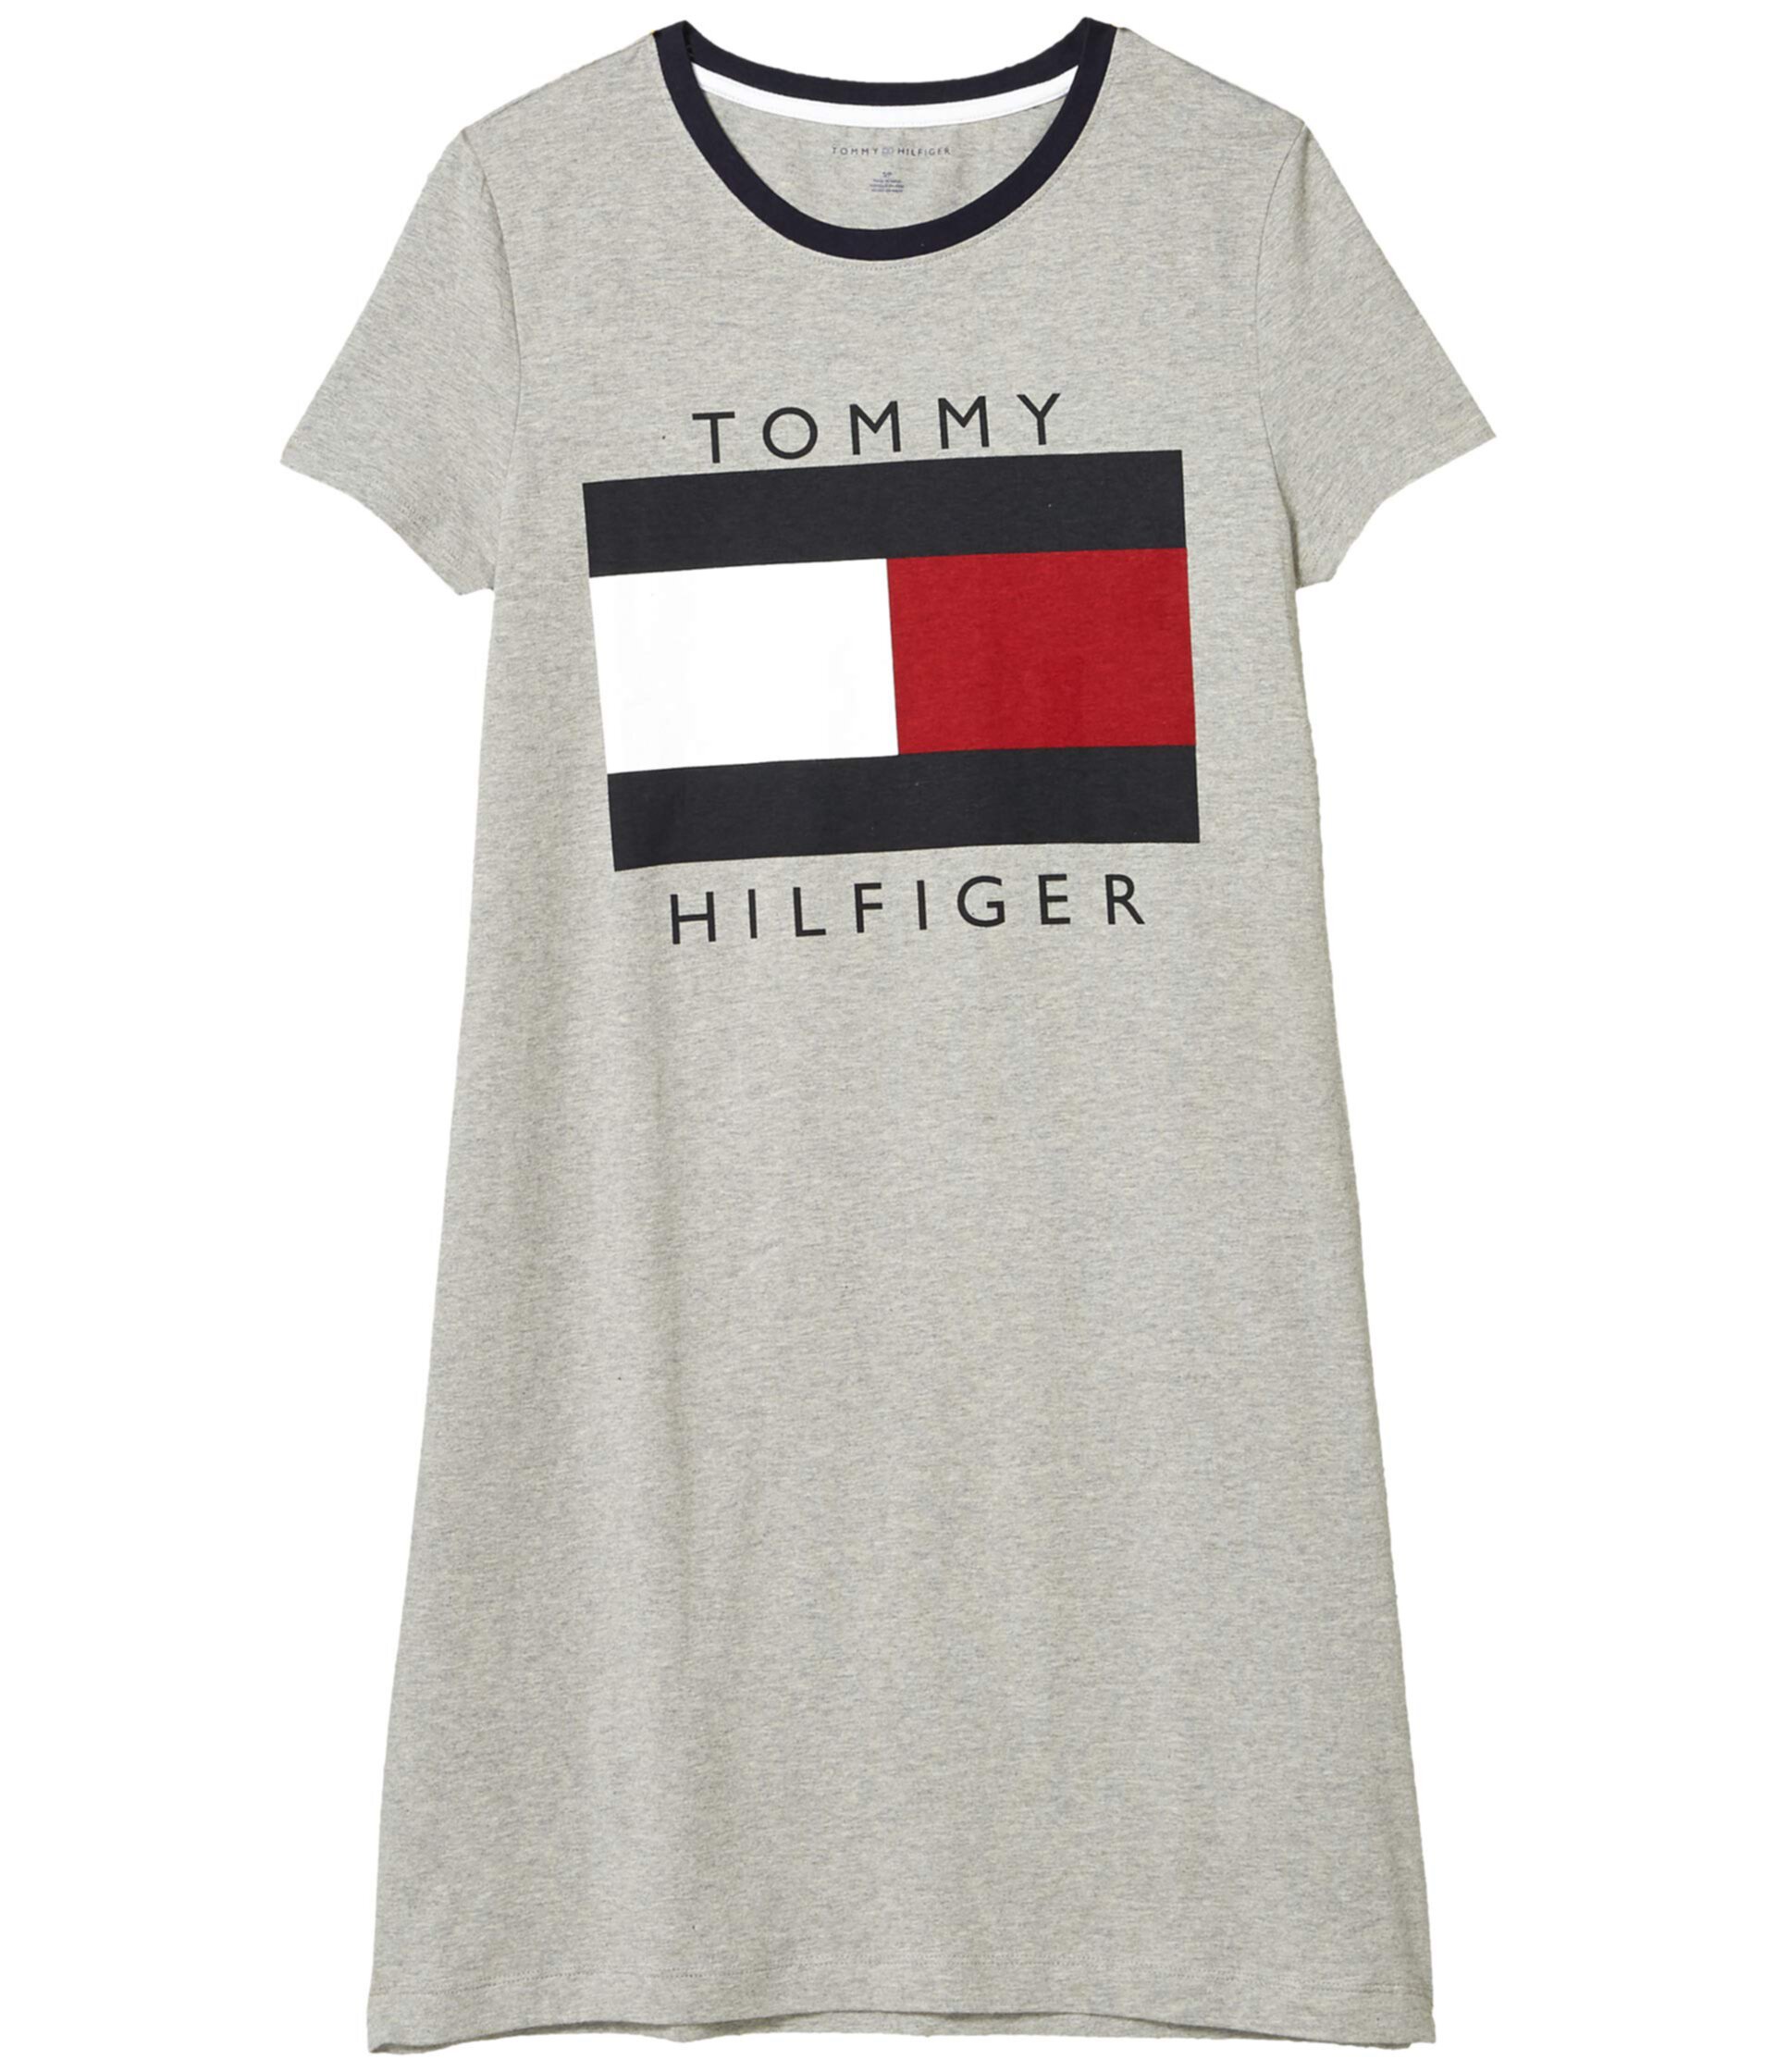 Платье-футболка с флагом TH Tommy Hilfiger